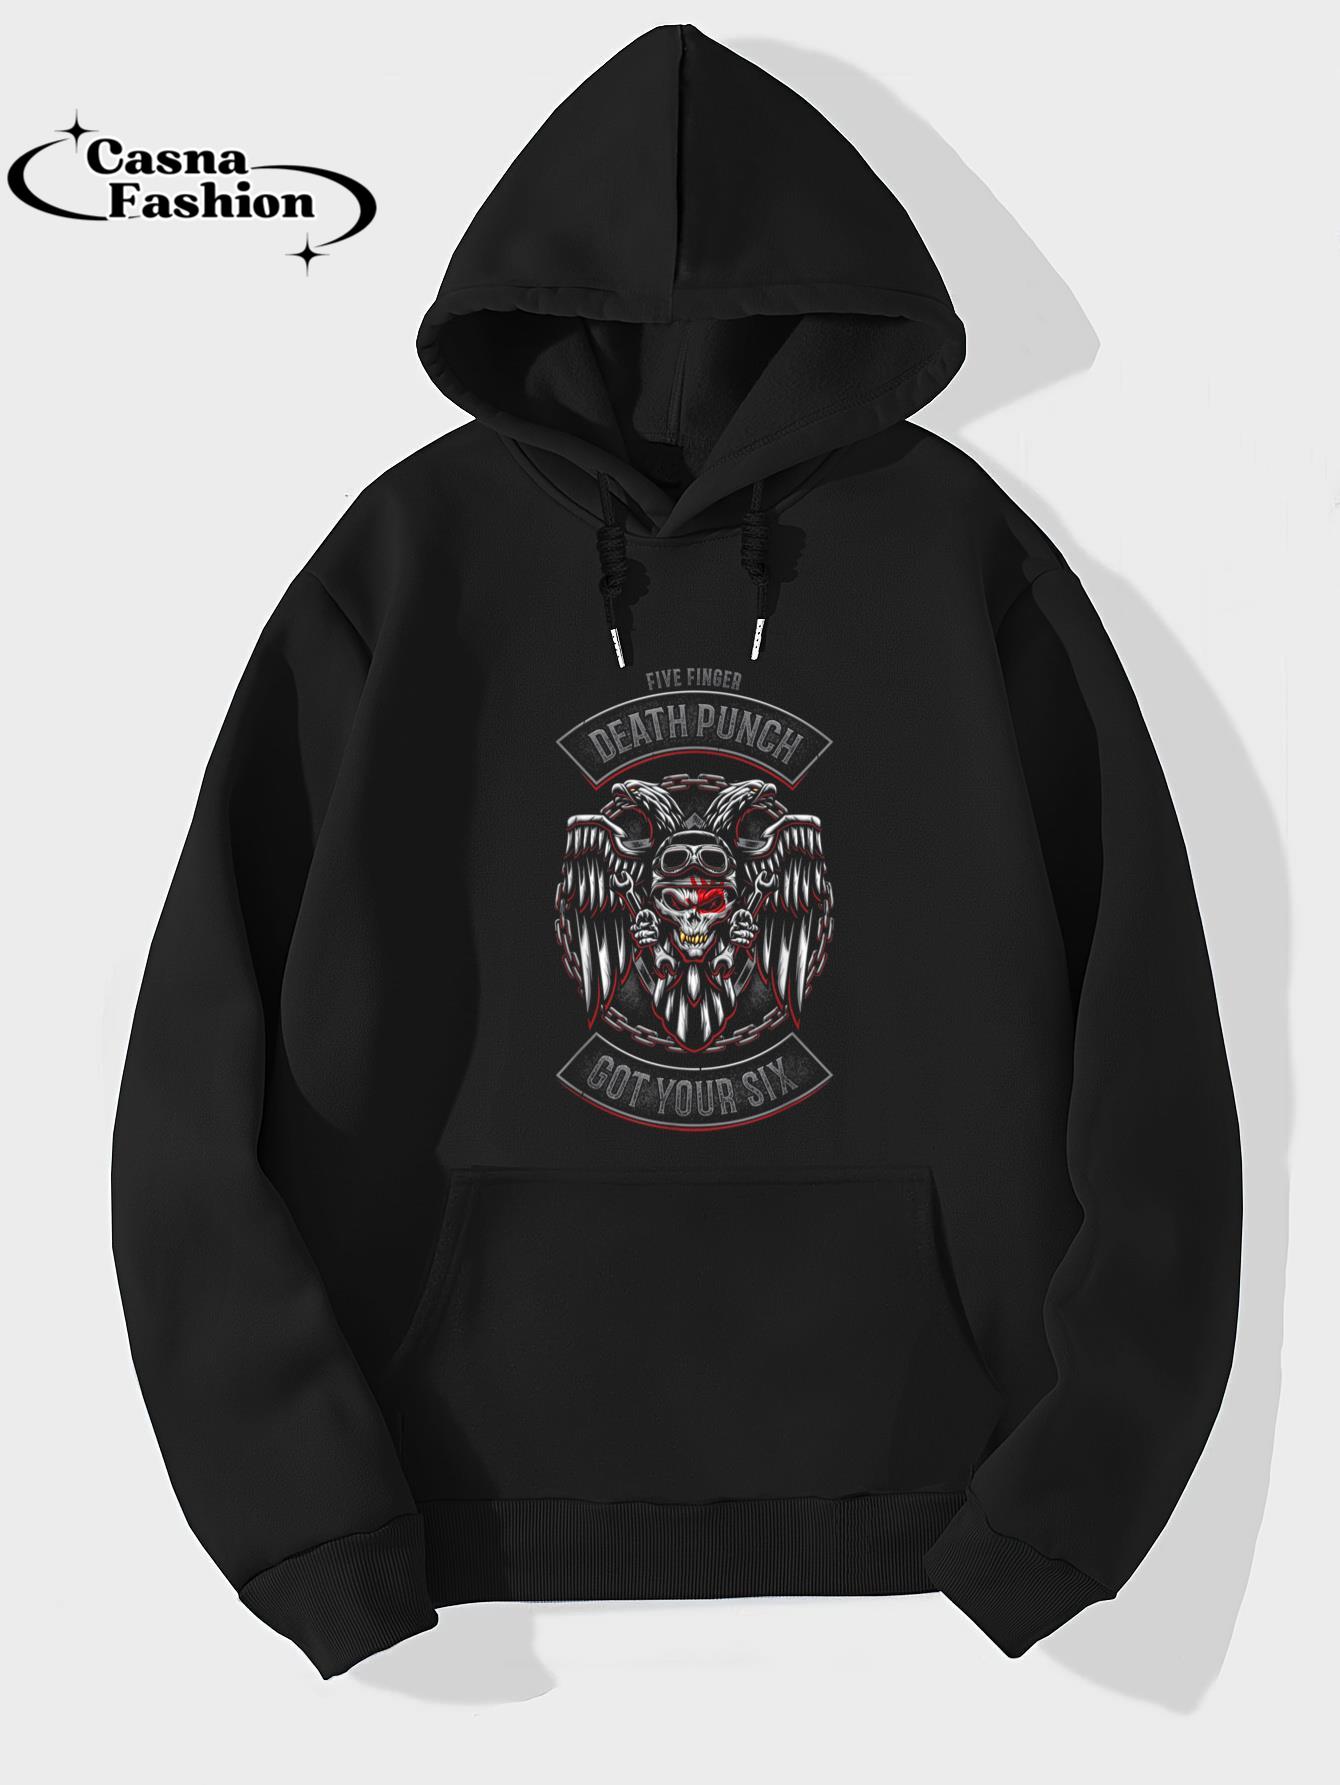 casnafashion_Hoodie_5FDP - Biker Badge - Got Your Six T-Shirt_hoodie_black hoodie